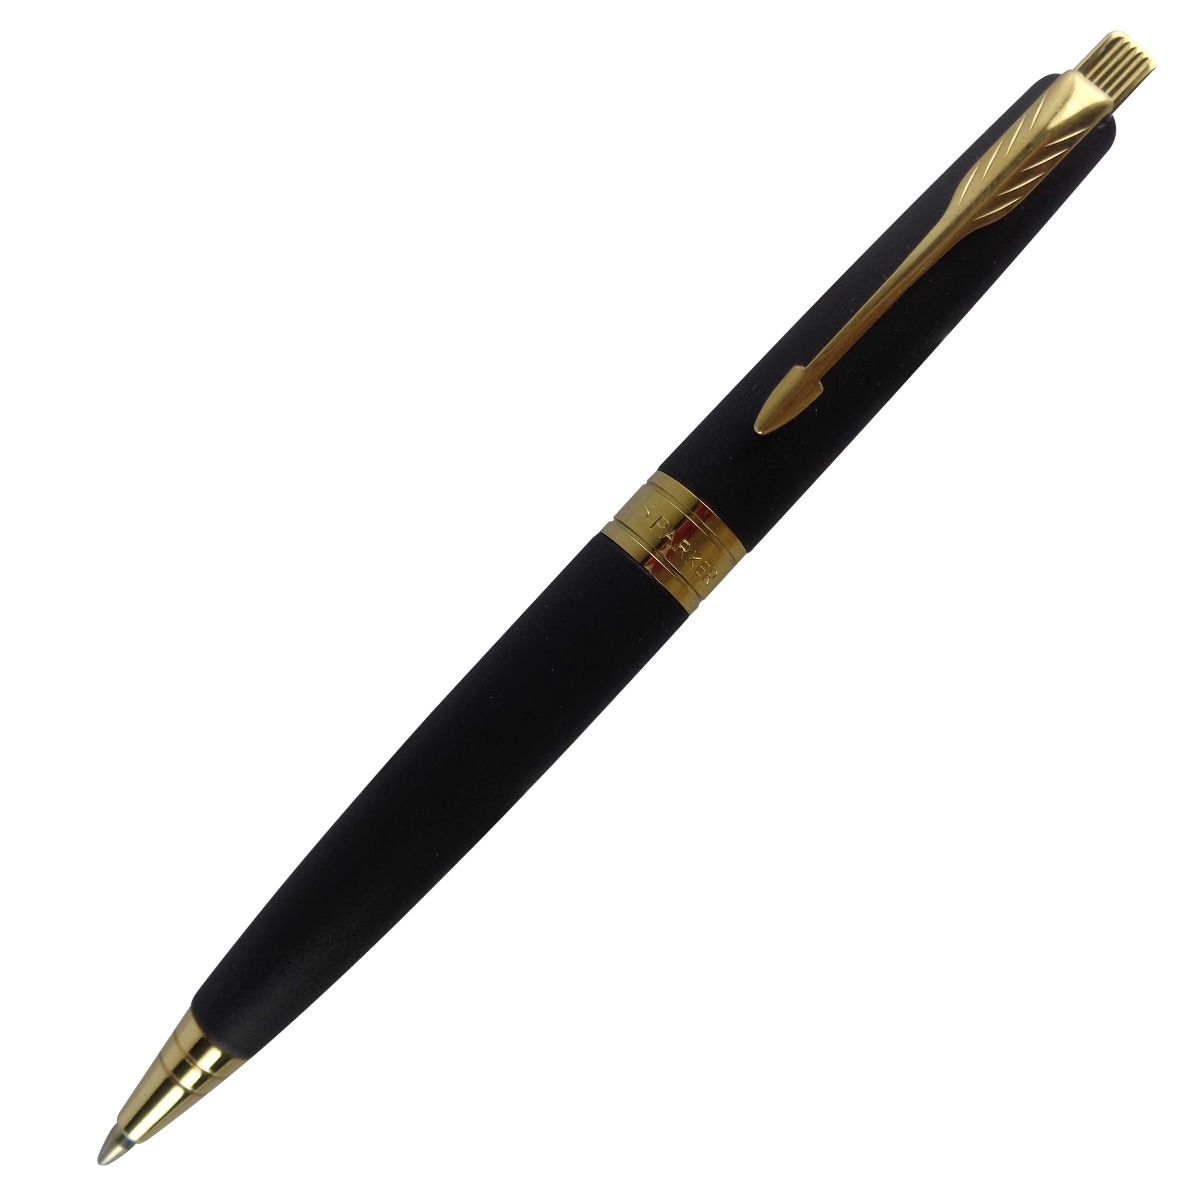 Parker Model: 14912 Aster Black color mat finish body with golden clip medium tip retractable ball pen